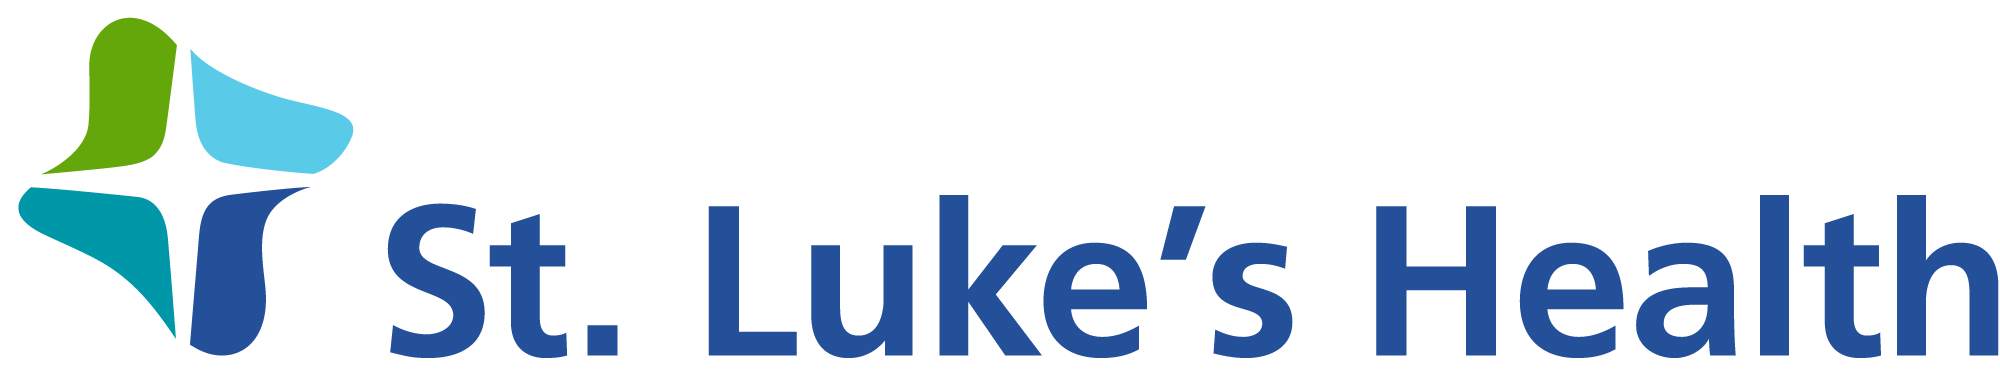 CHI St. Luke's Health logo